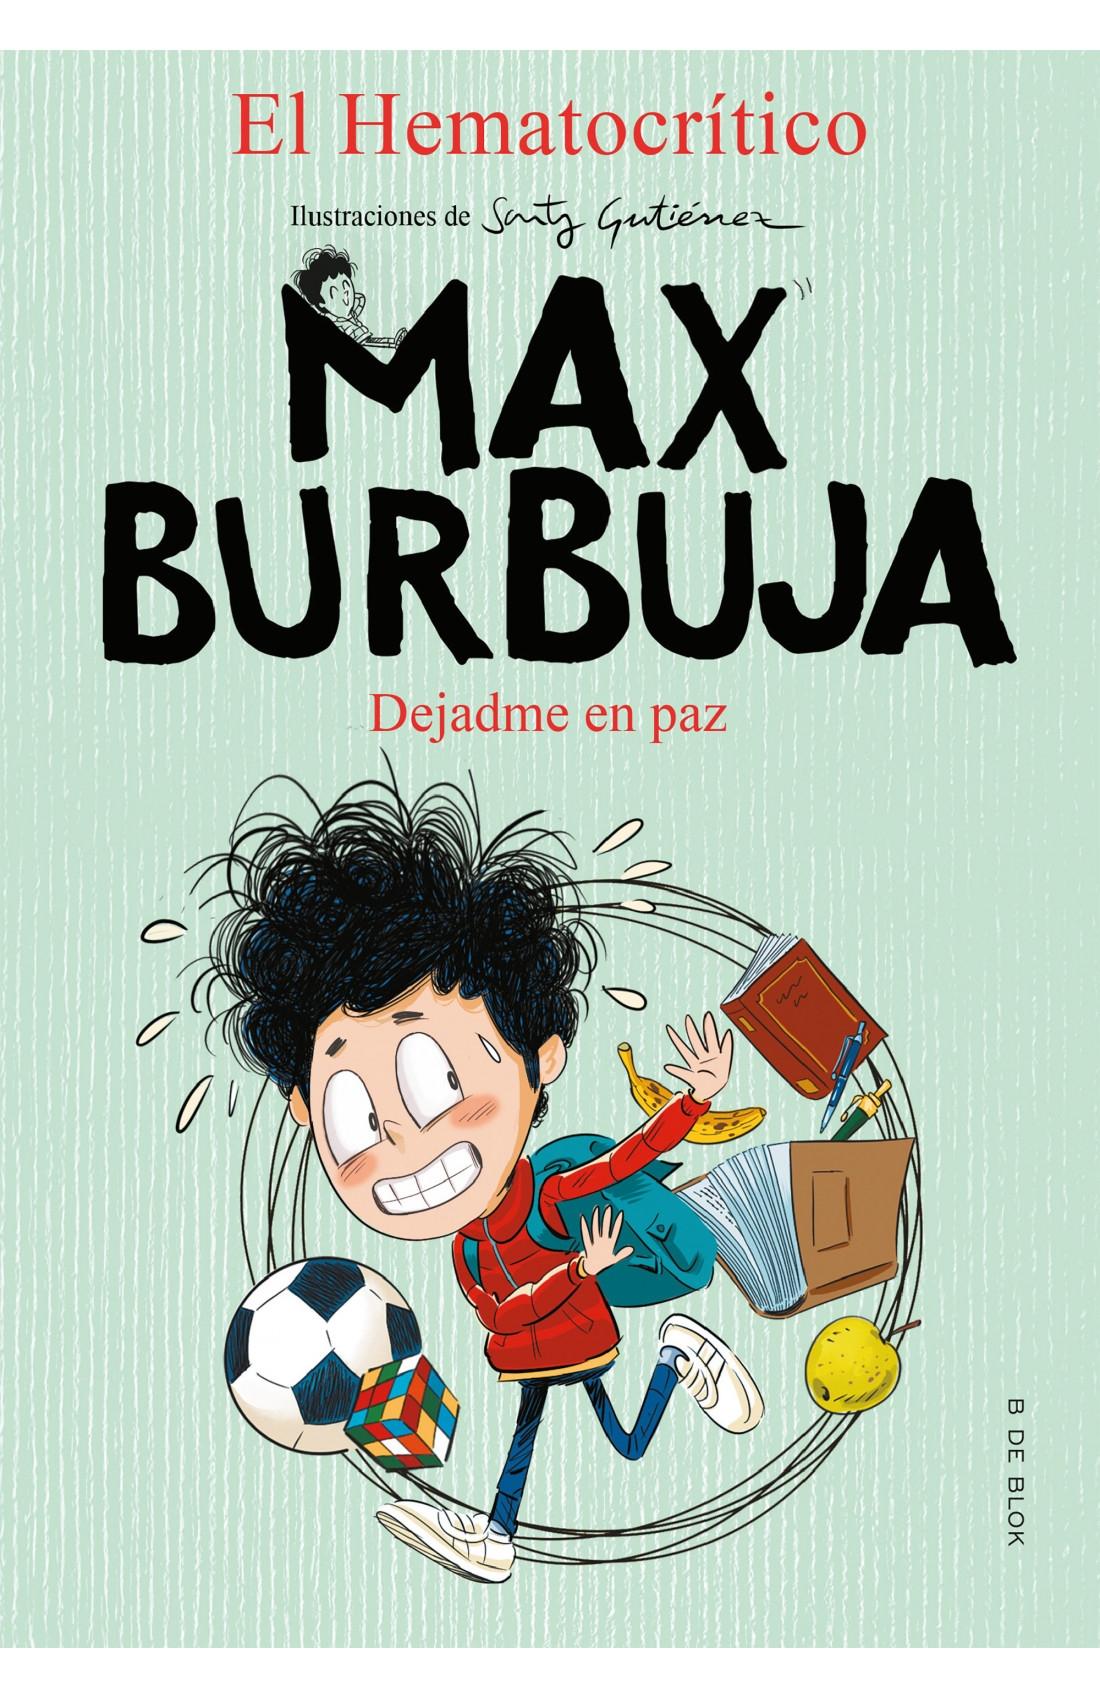 Max Burbuja 1 "Dejadme en paz"